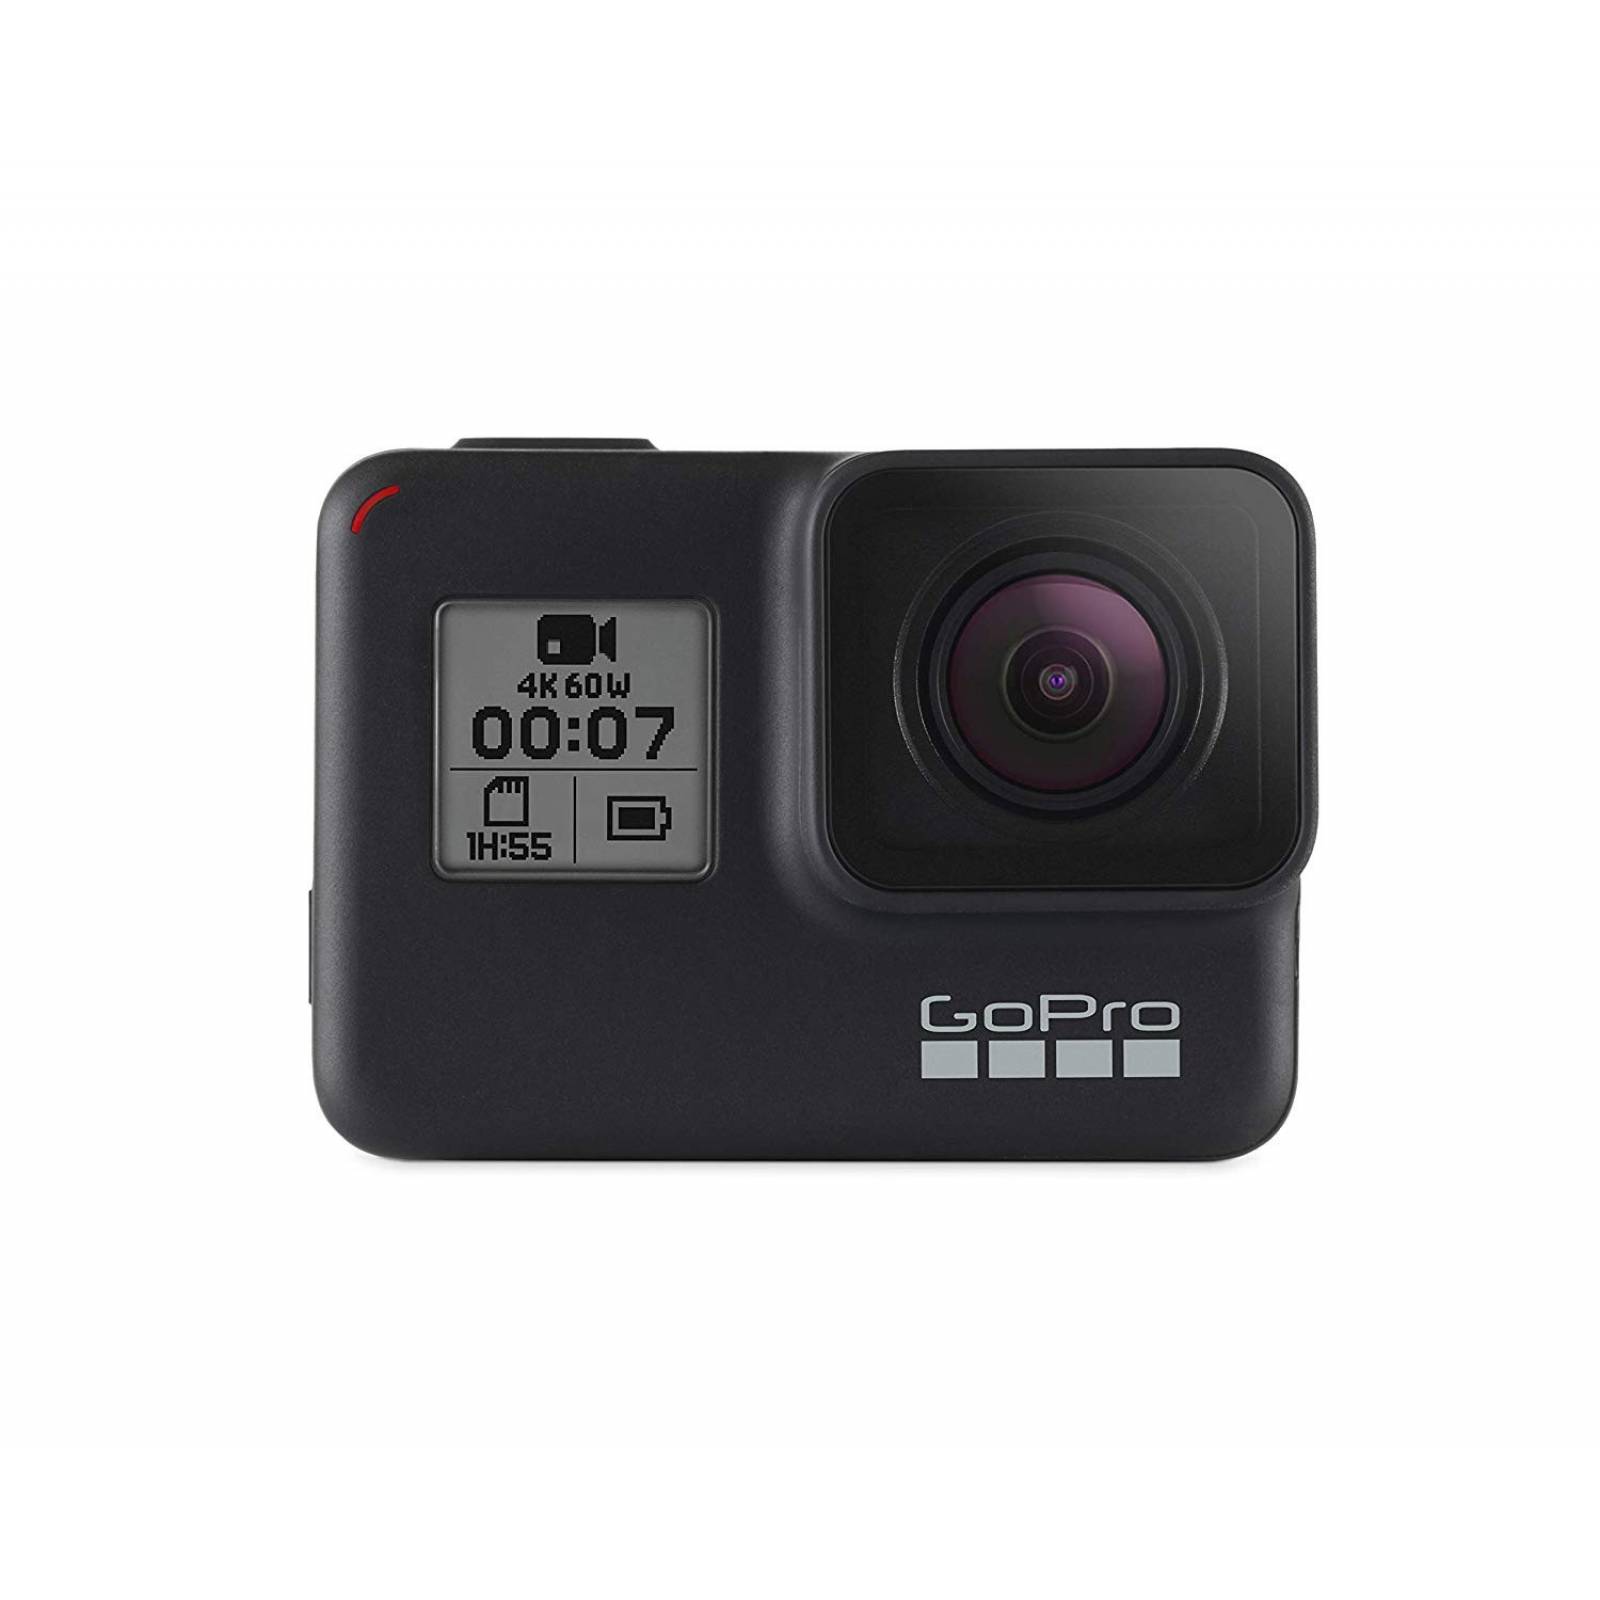 Cámara GoPro CHDHX-701 4K HD Video 12MP contra agua